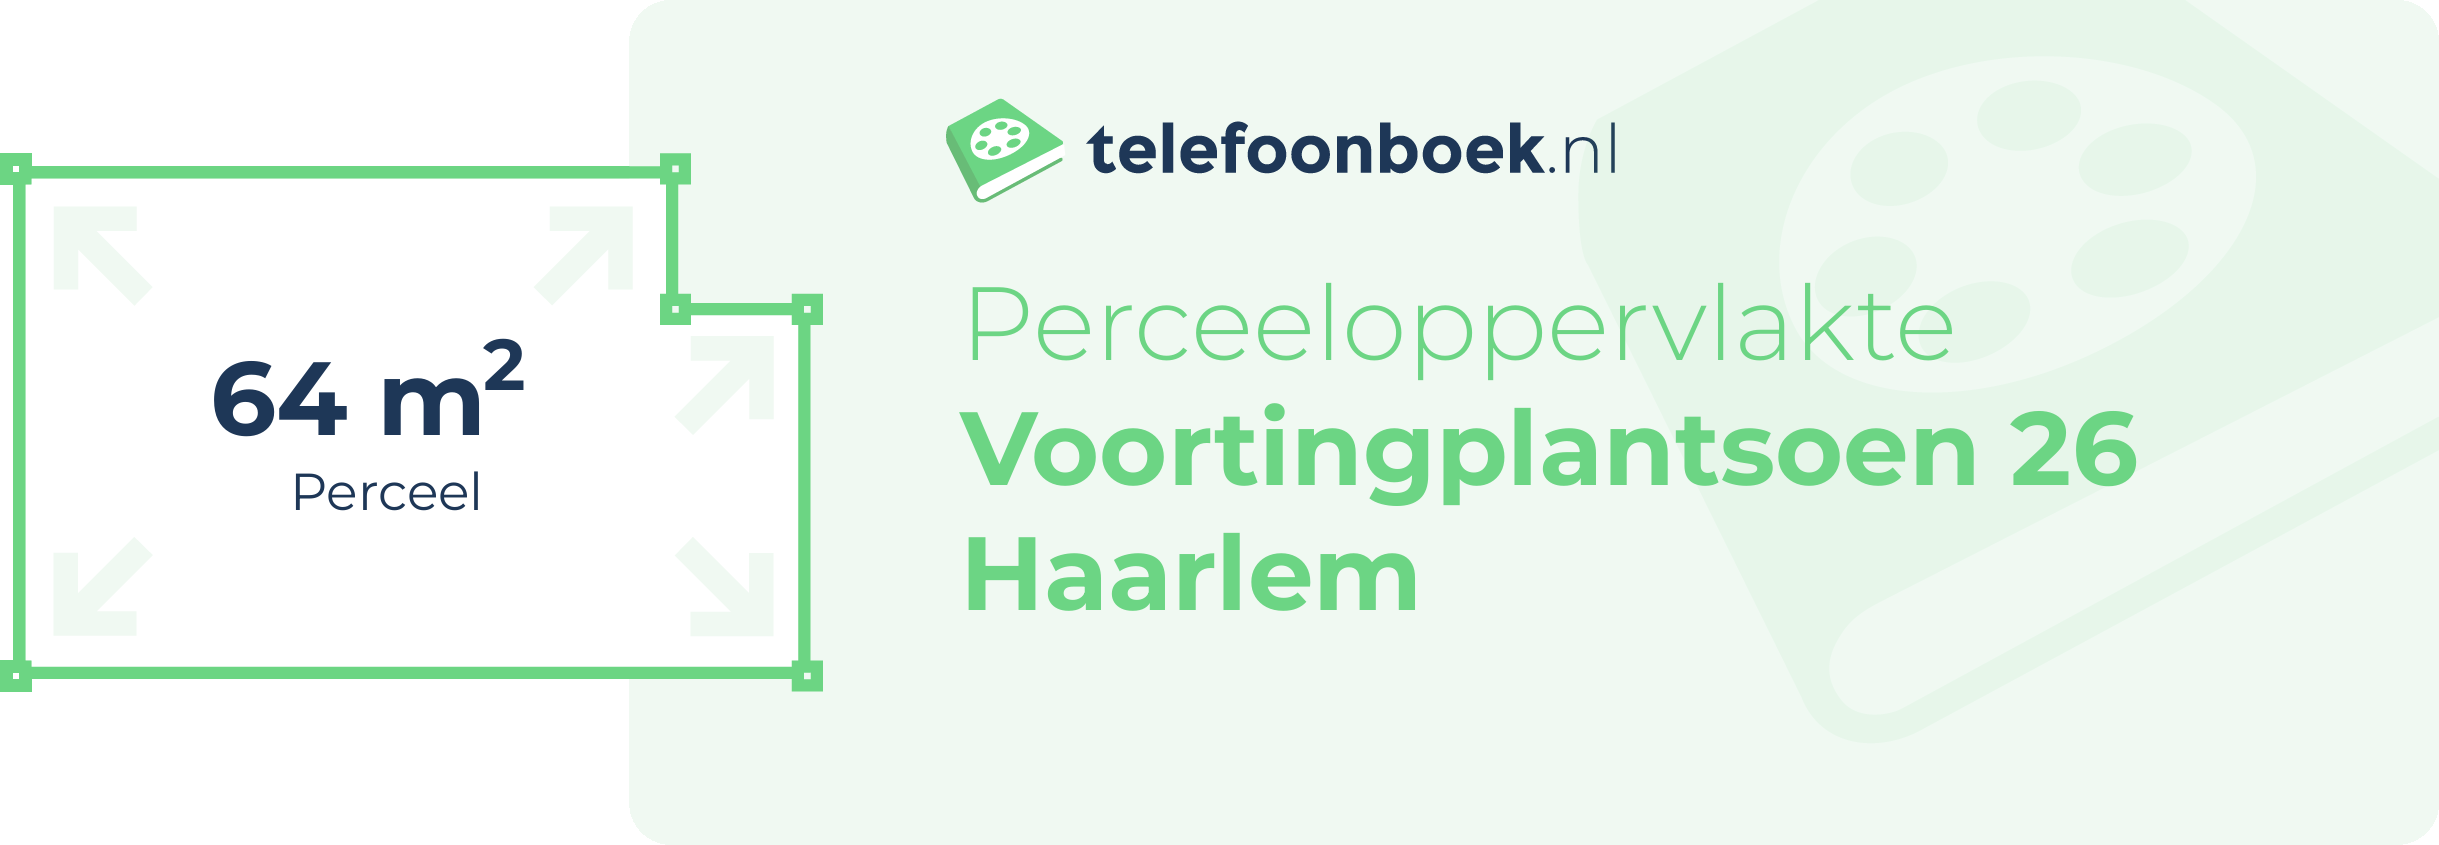 Perceeloppervlakte Voortingplantsoen 26 Haarlem